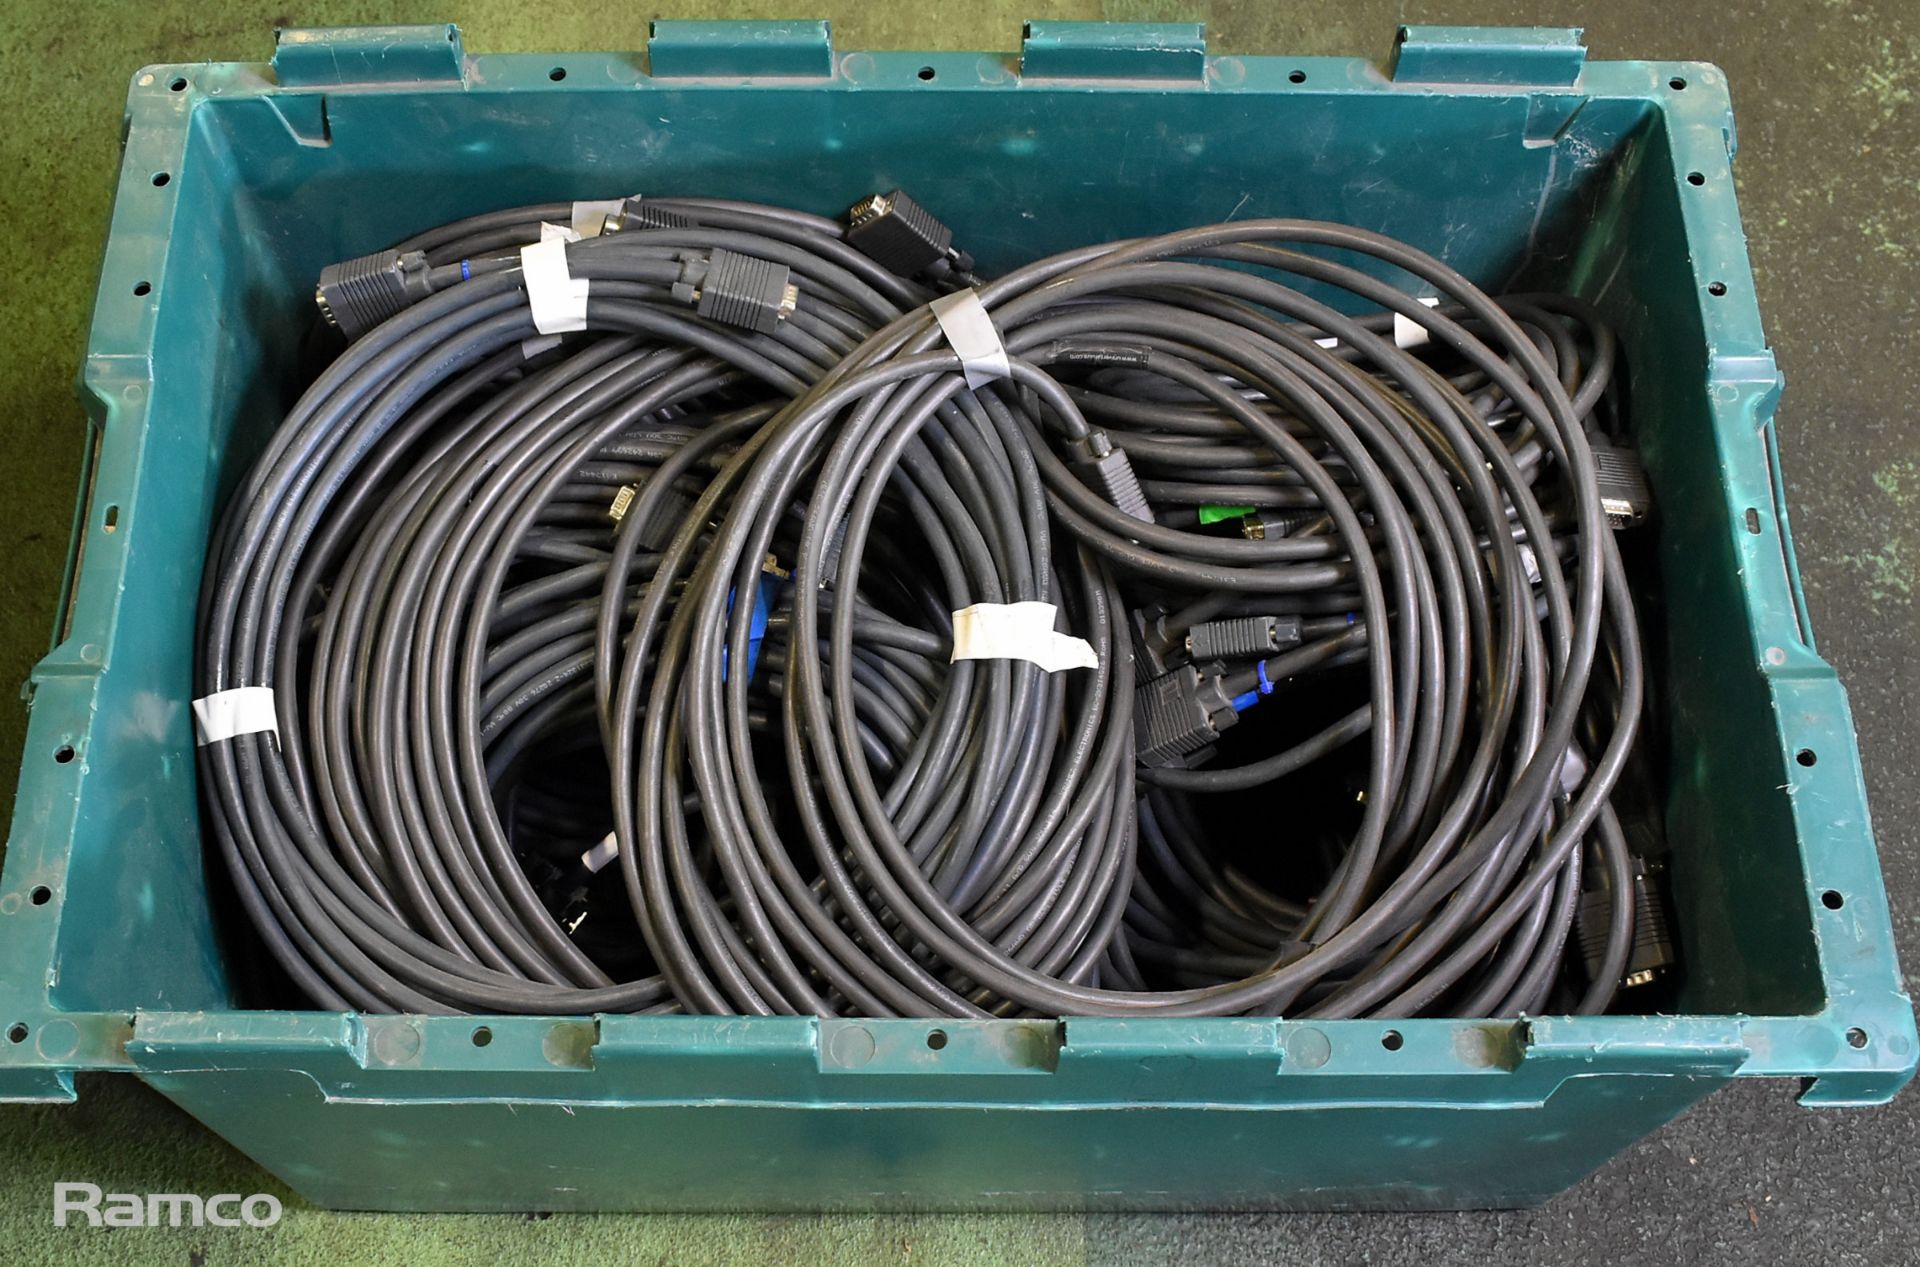 Box of mixed VGA cables - 2x 20m, 6x 15m, 6x 10m, 10x 5m, 8x 3m, 2x 2m, 1x 1m